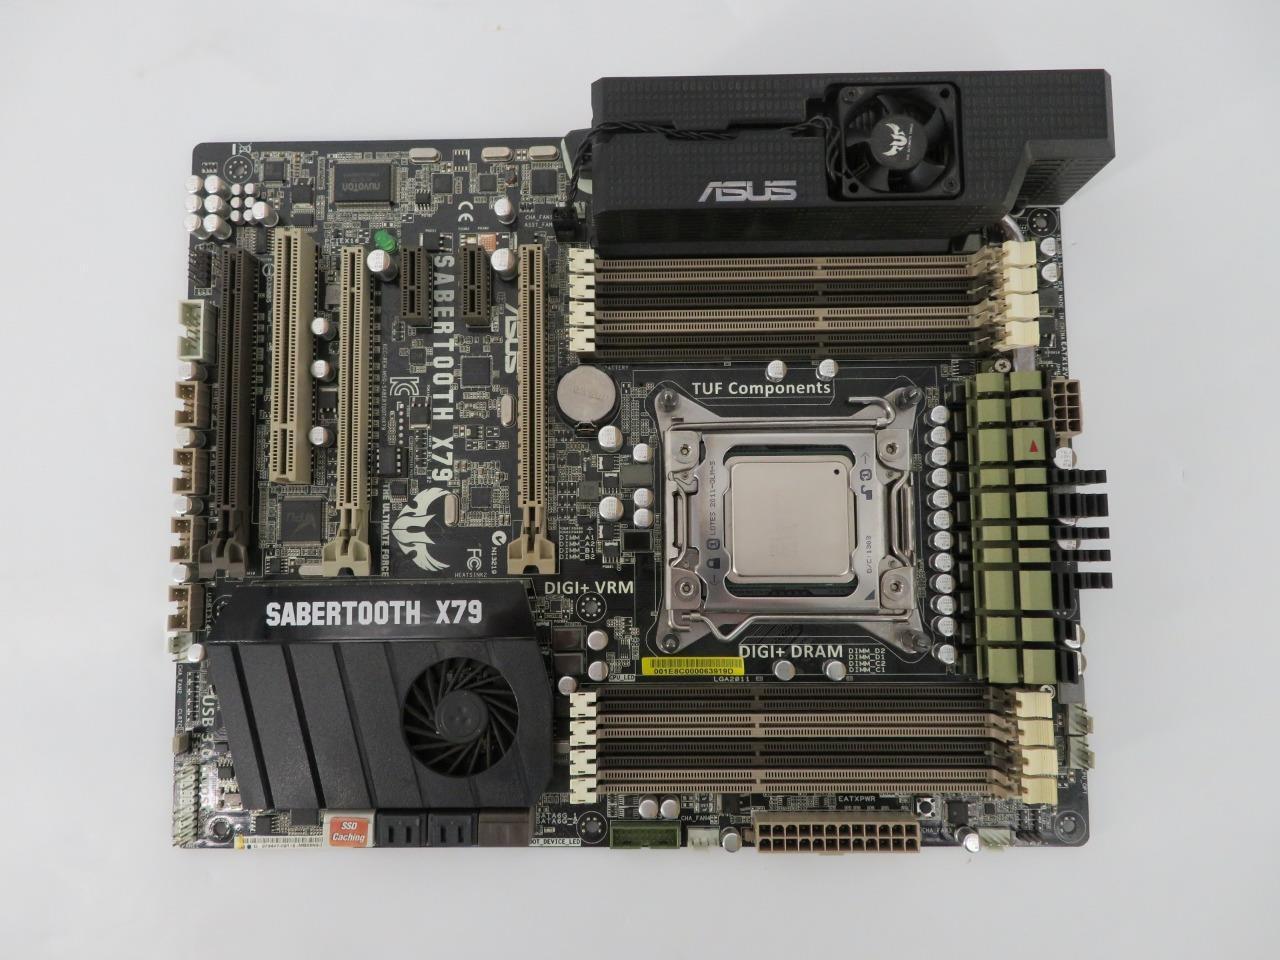 OEM ASUS Sabertooth X79 Gaming Motherboard + i7-3930K CPU - WORKS GREAT